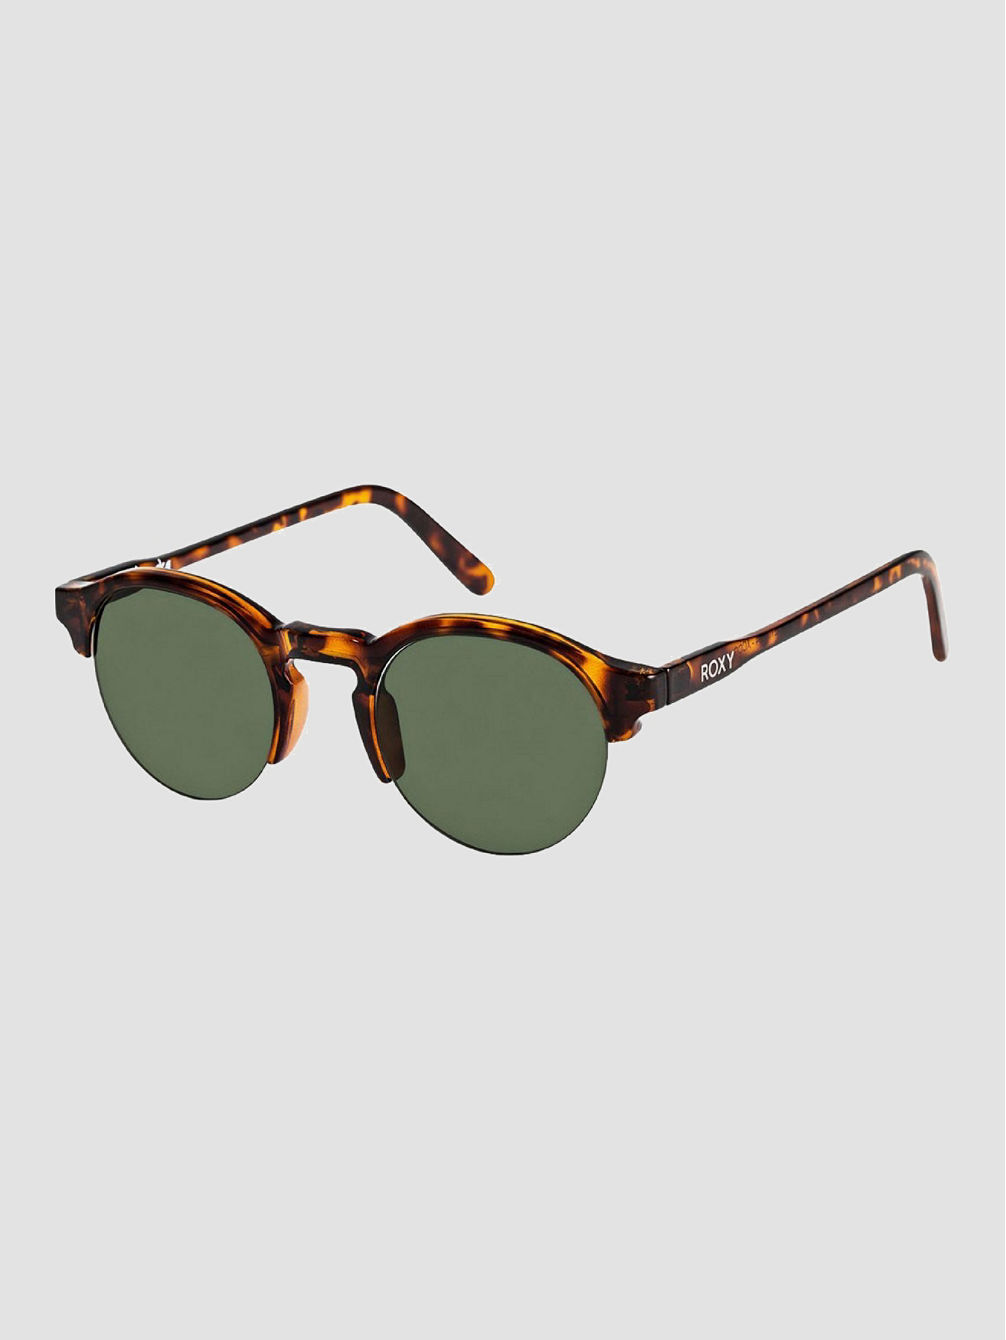 Minoaka Shiny Tortoise Sunglasses